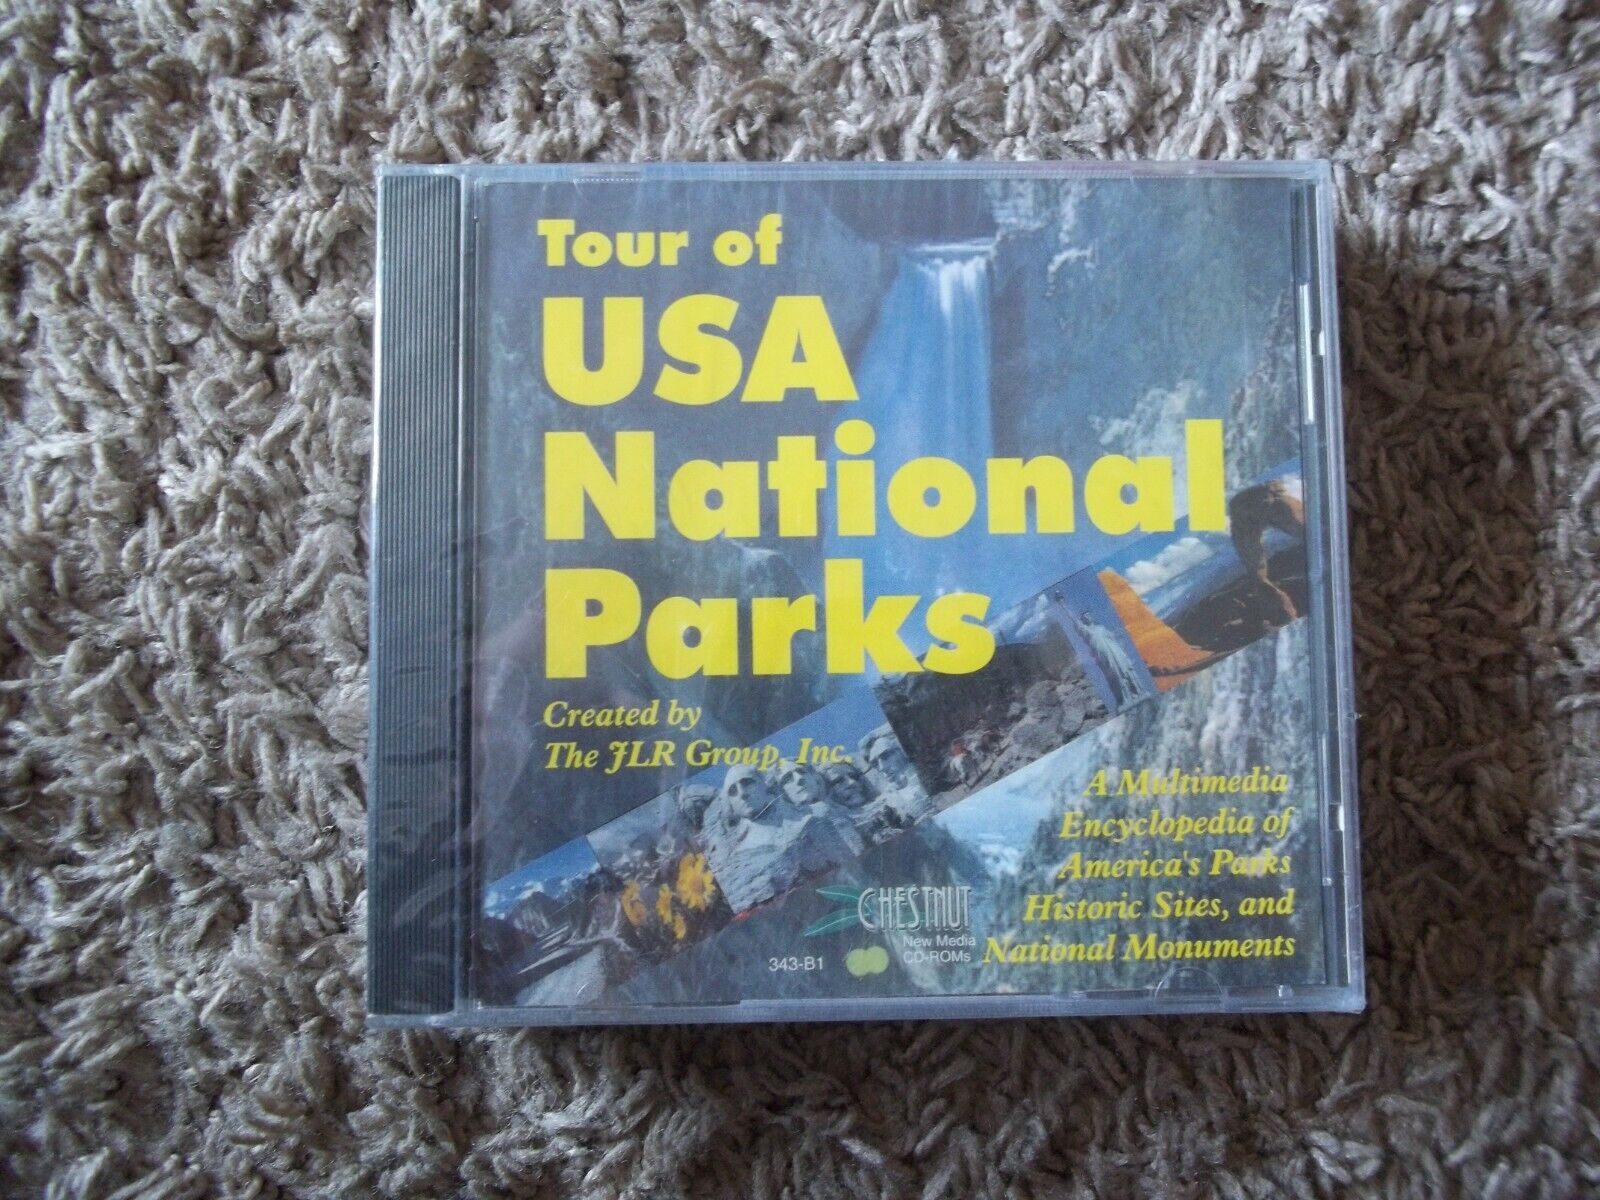 Tour of USA National Parks PC  (CD-Rom, JLR Group) Chesnut New Media Win 3.1